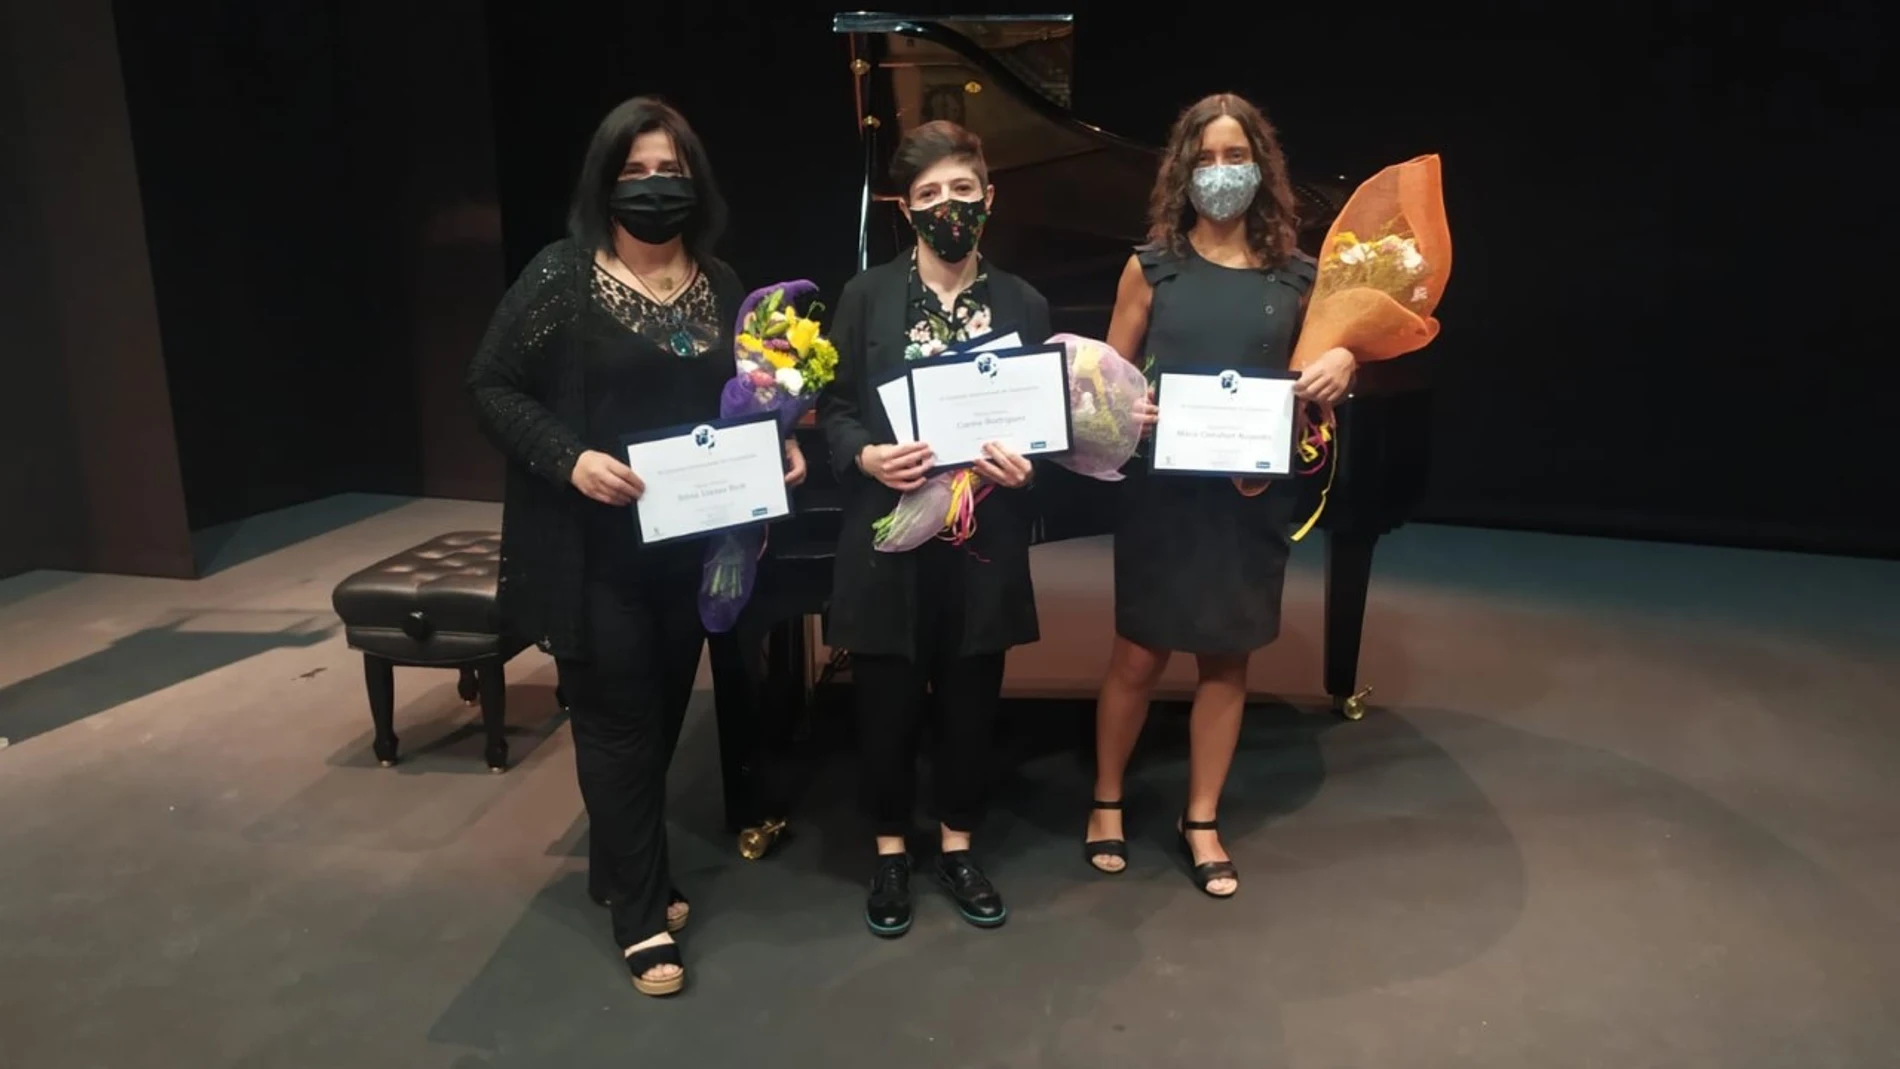 III Concurso Internacional de Composición María de Pablos que ganó Carme Rodríguez